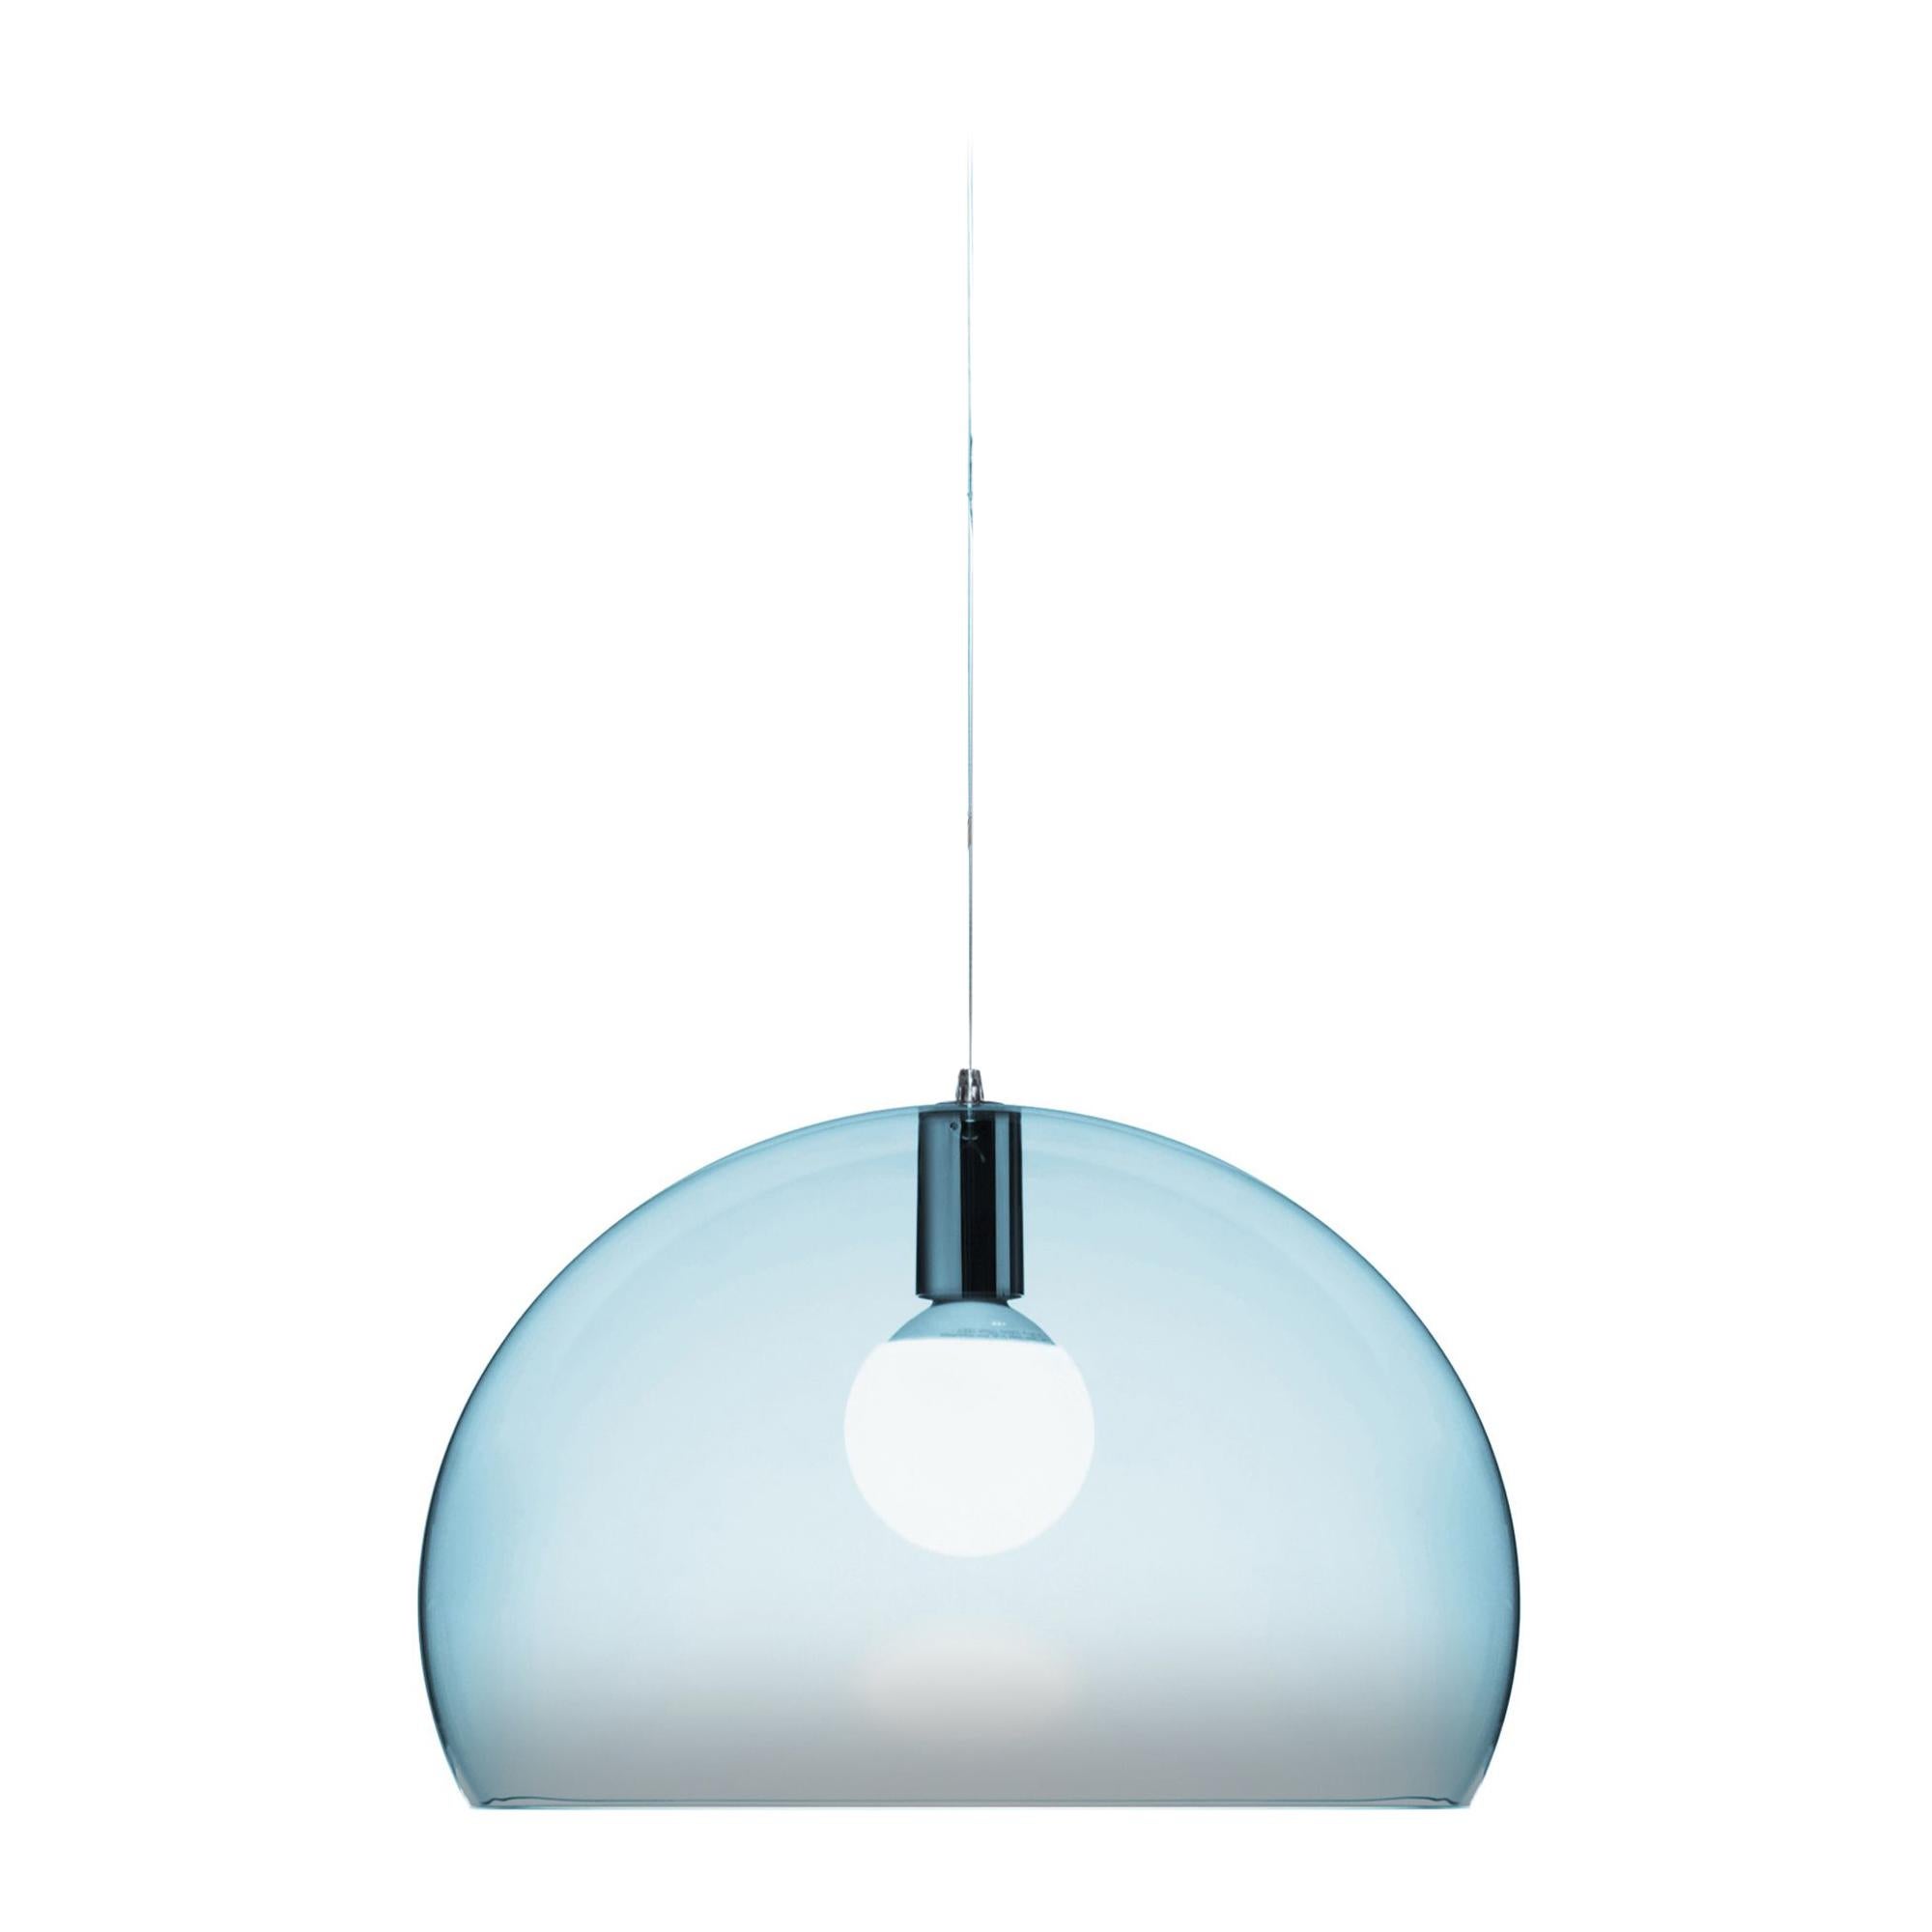 Petite lampe à suspension Kartell FL/Y bleu ciel, design Ferruccio Laviani en vente